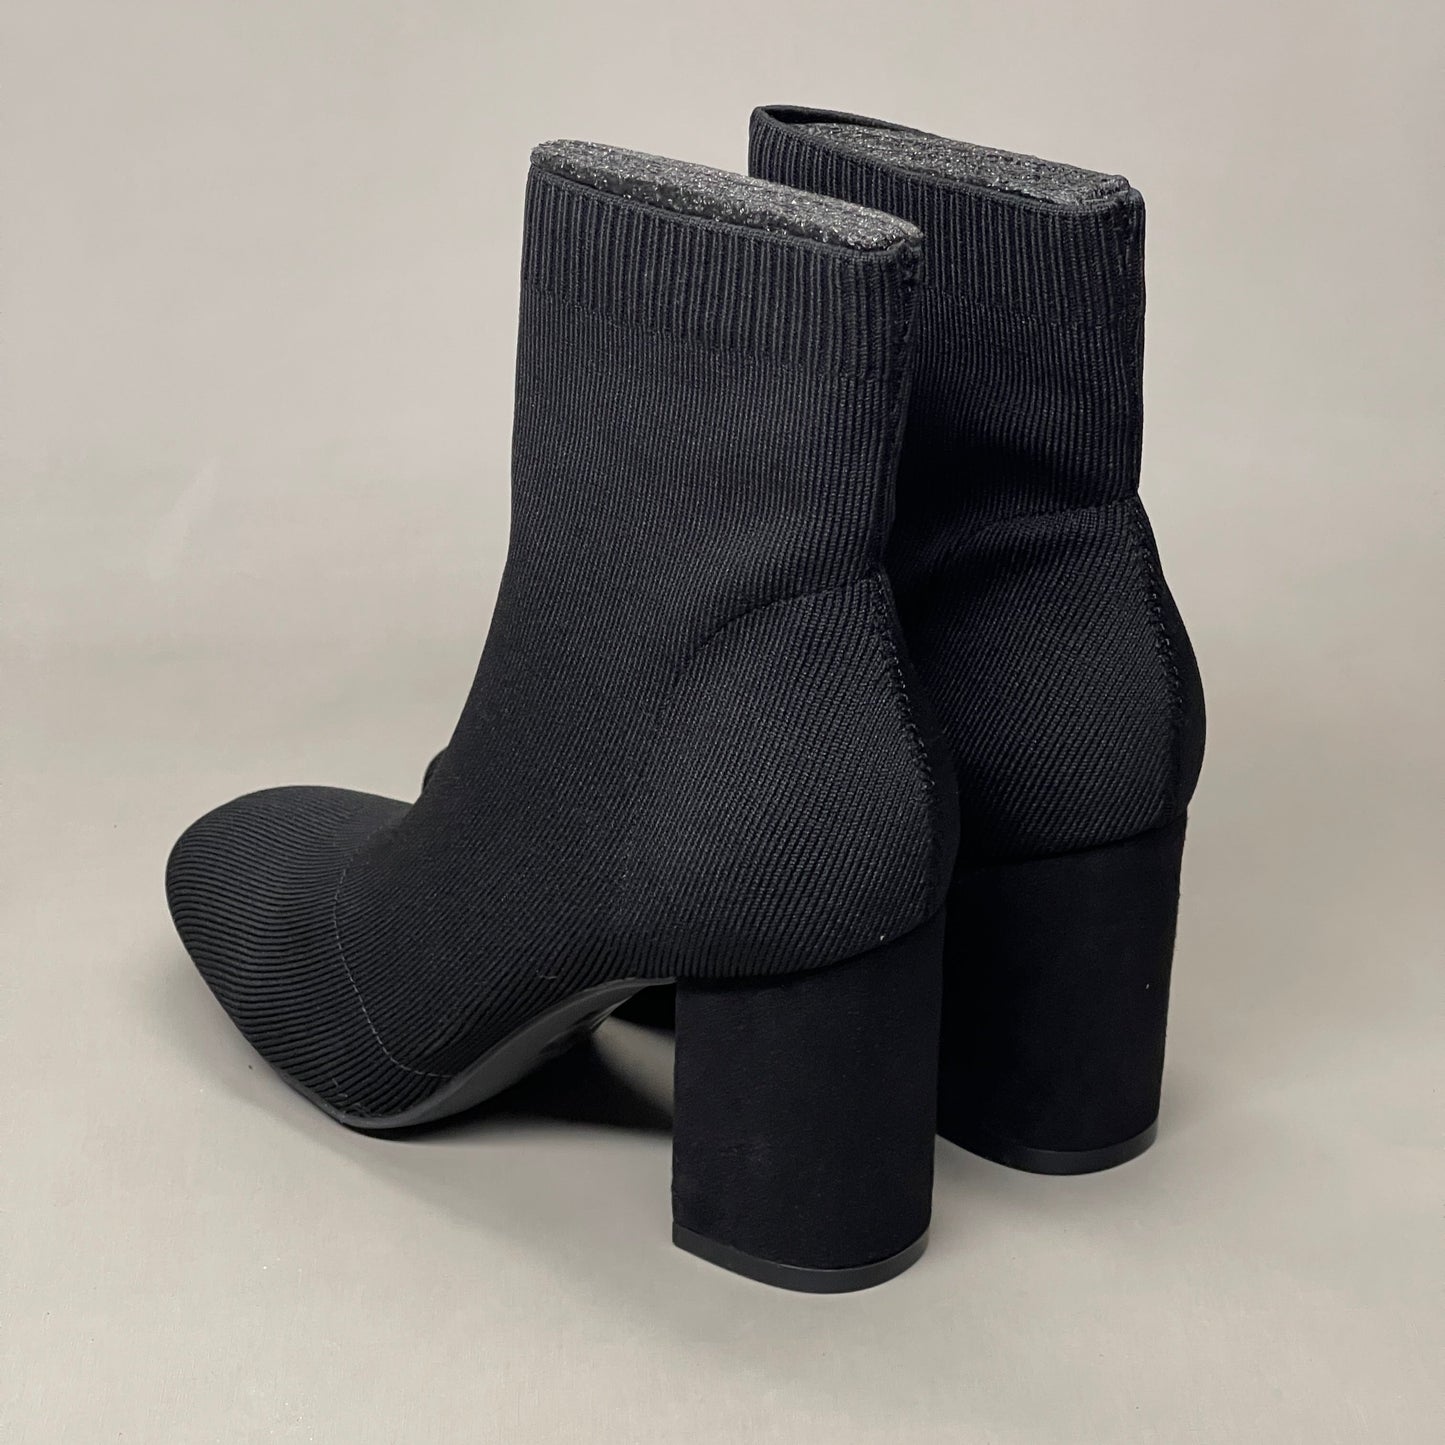 MIA Erika Fly Knit Booties Dress Boots Black 2” Heel Sz 5.5 GS7553115Y (New)